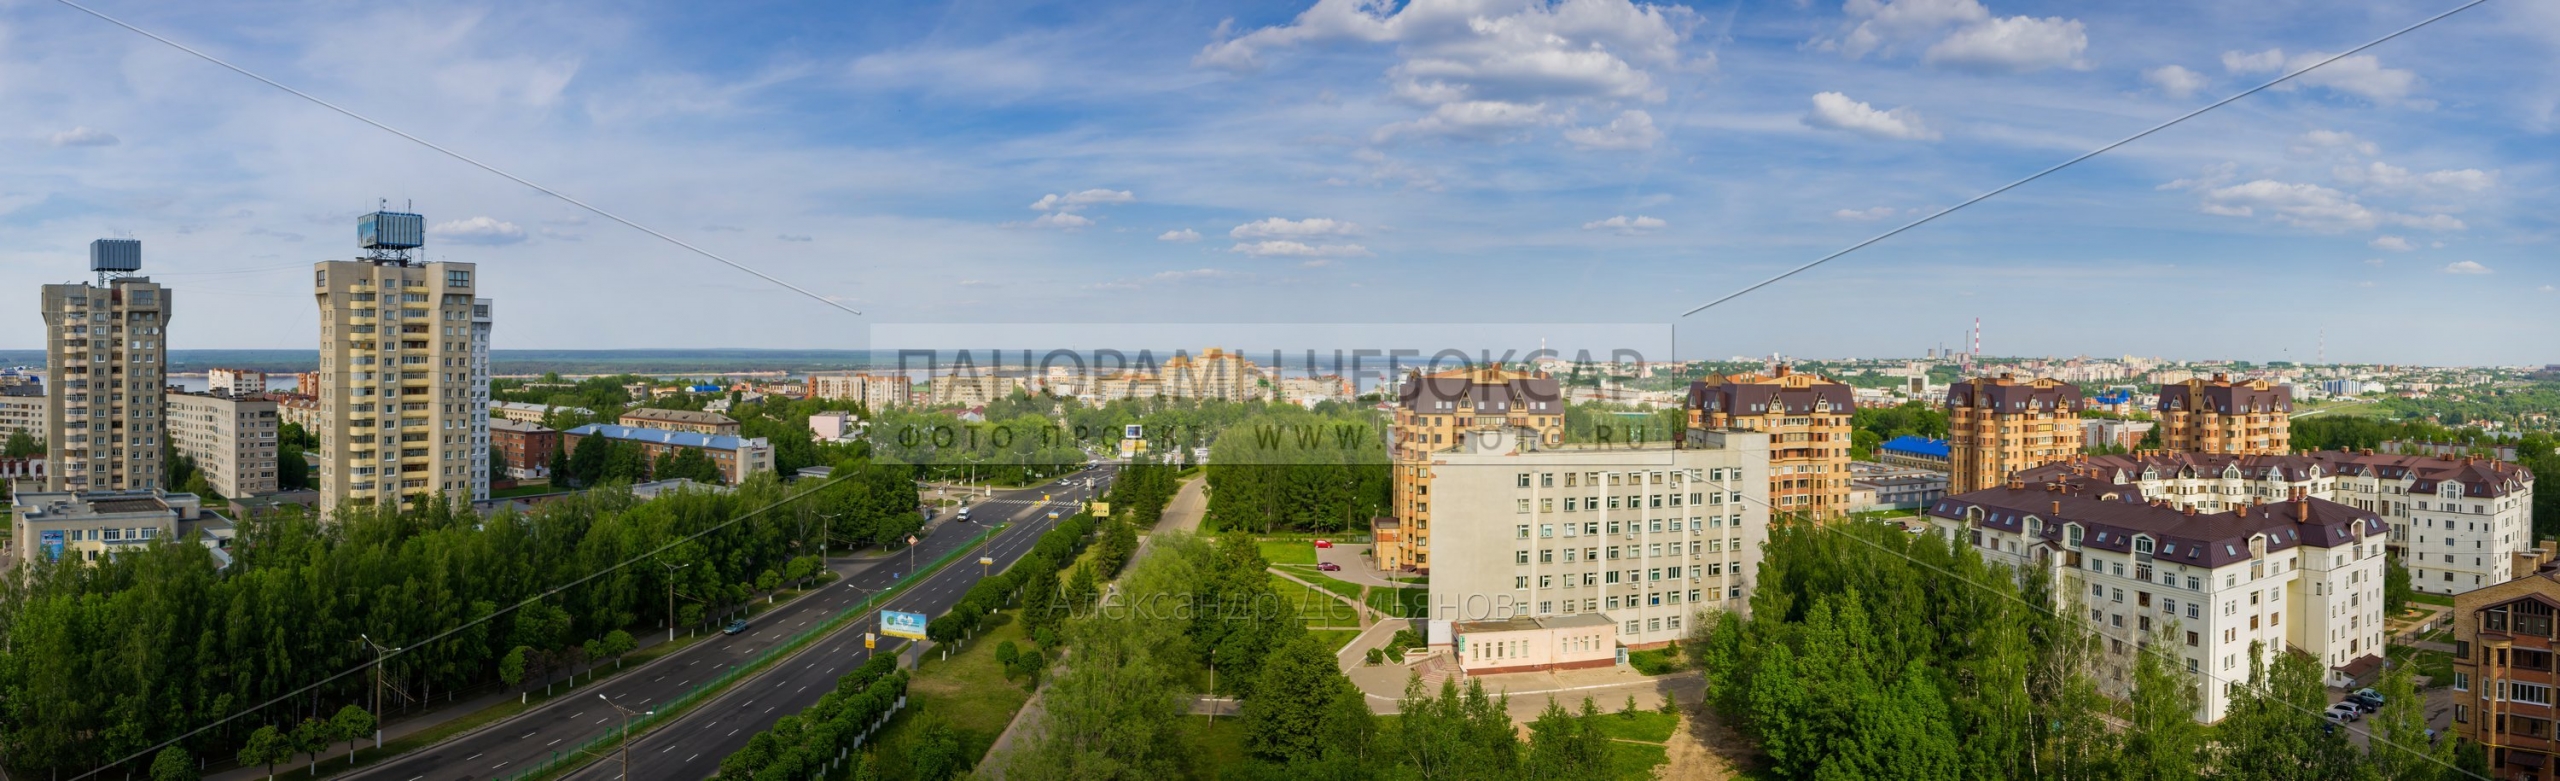 Остановка Афанасьева — панорама города